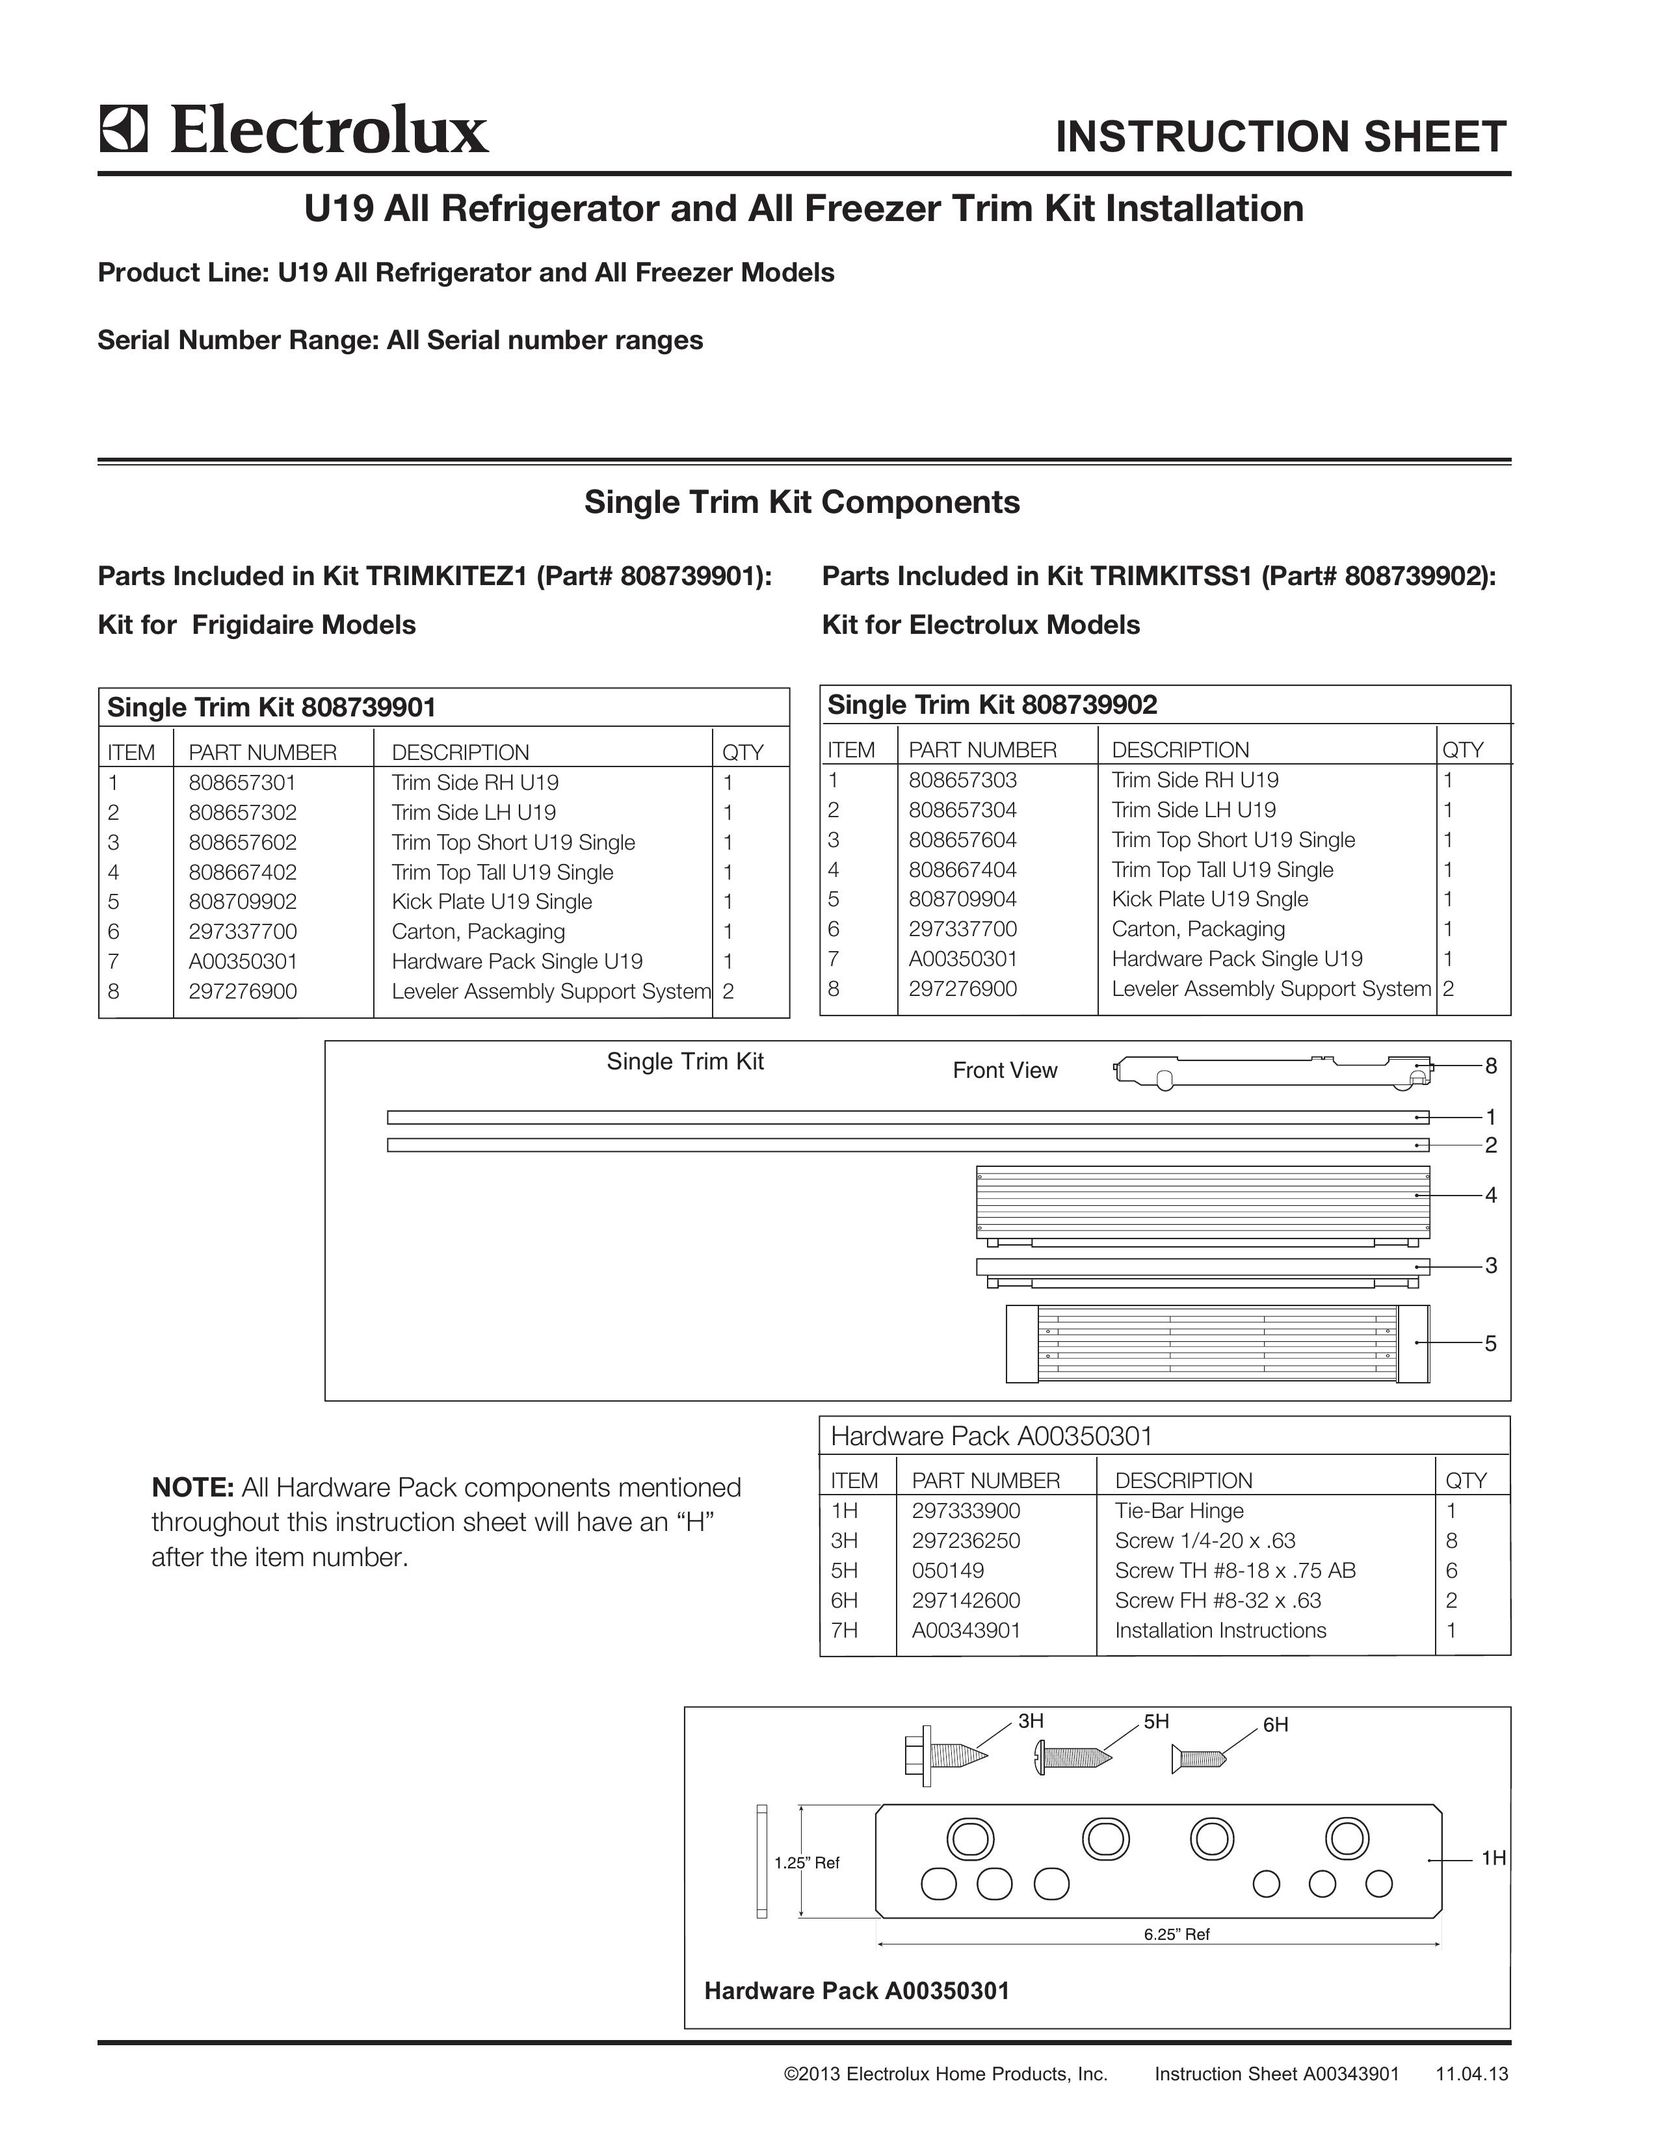 Electrolux TRIMKITEZ1 Appliance Trim Kit User Manual (Page 1)